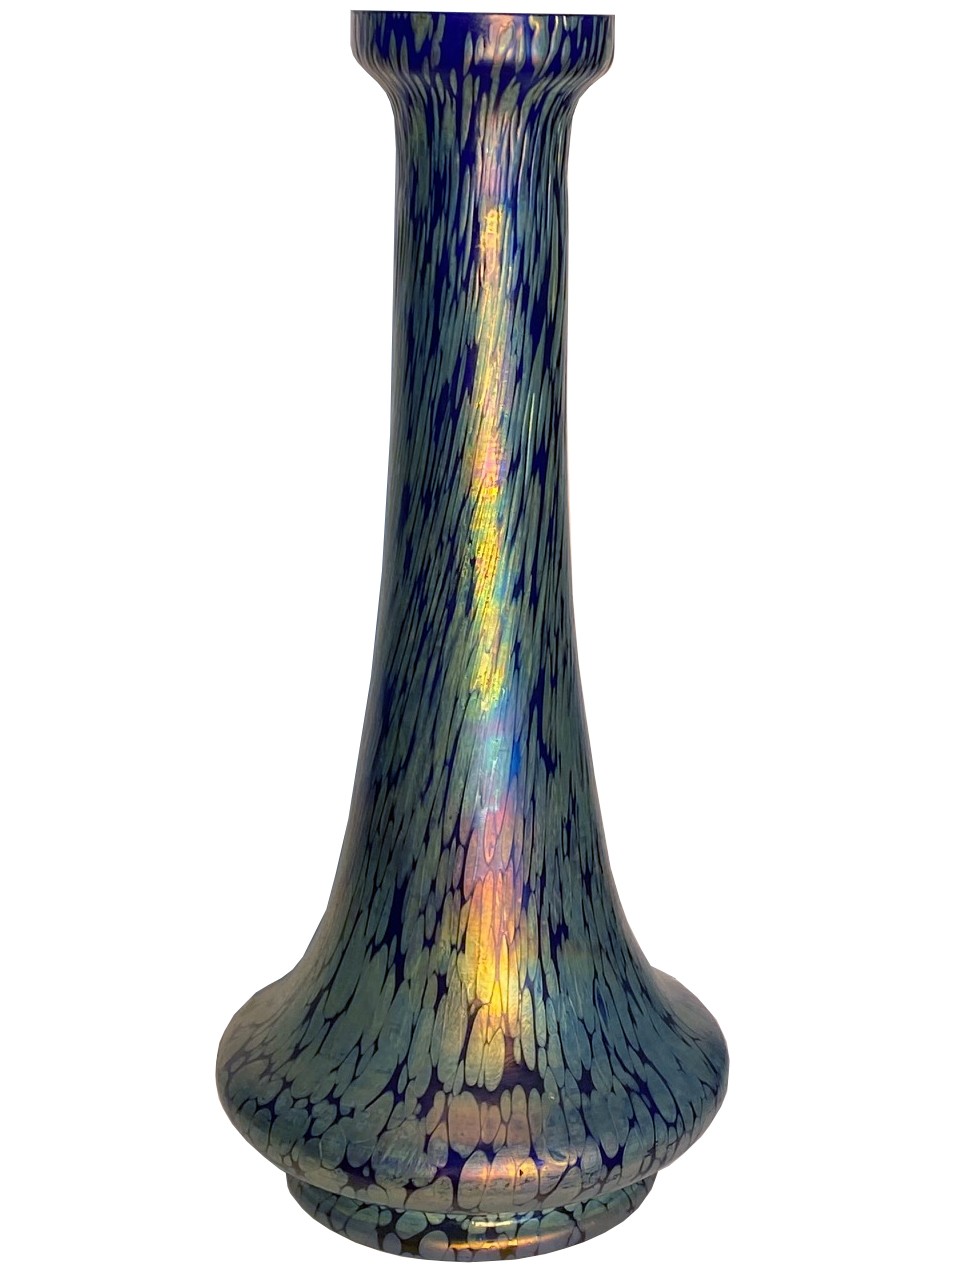 Loetz Art Nouveau Iridescent Glass Vase